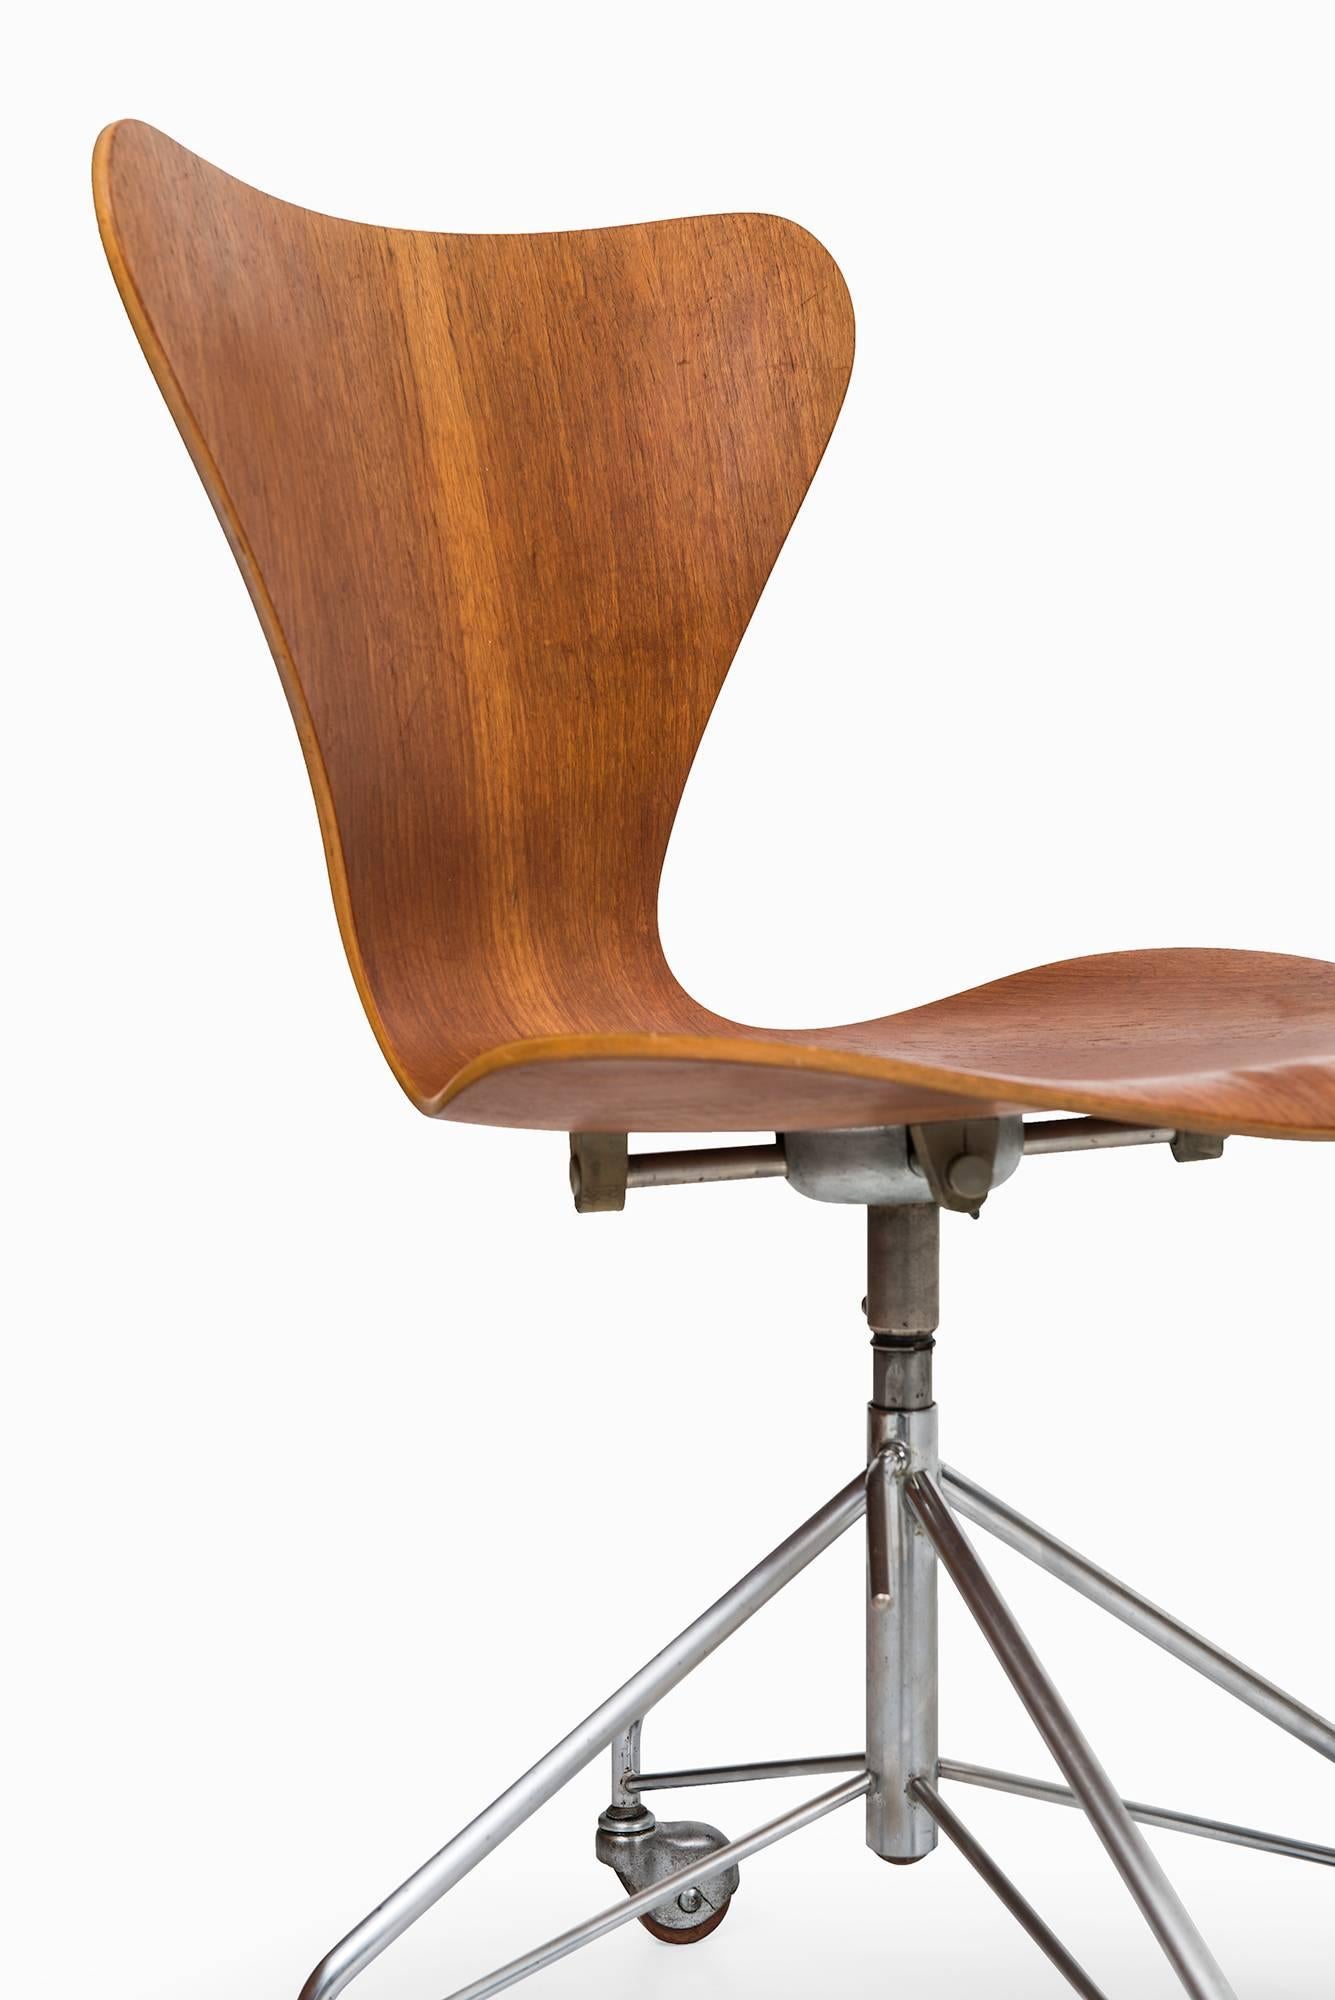 Rare office chair model 3117 designed by Arne Jacobsen. Produced by Fritz Hansen in Denmark.